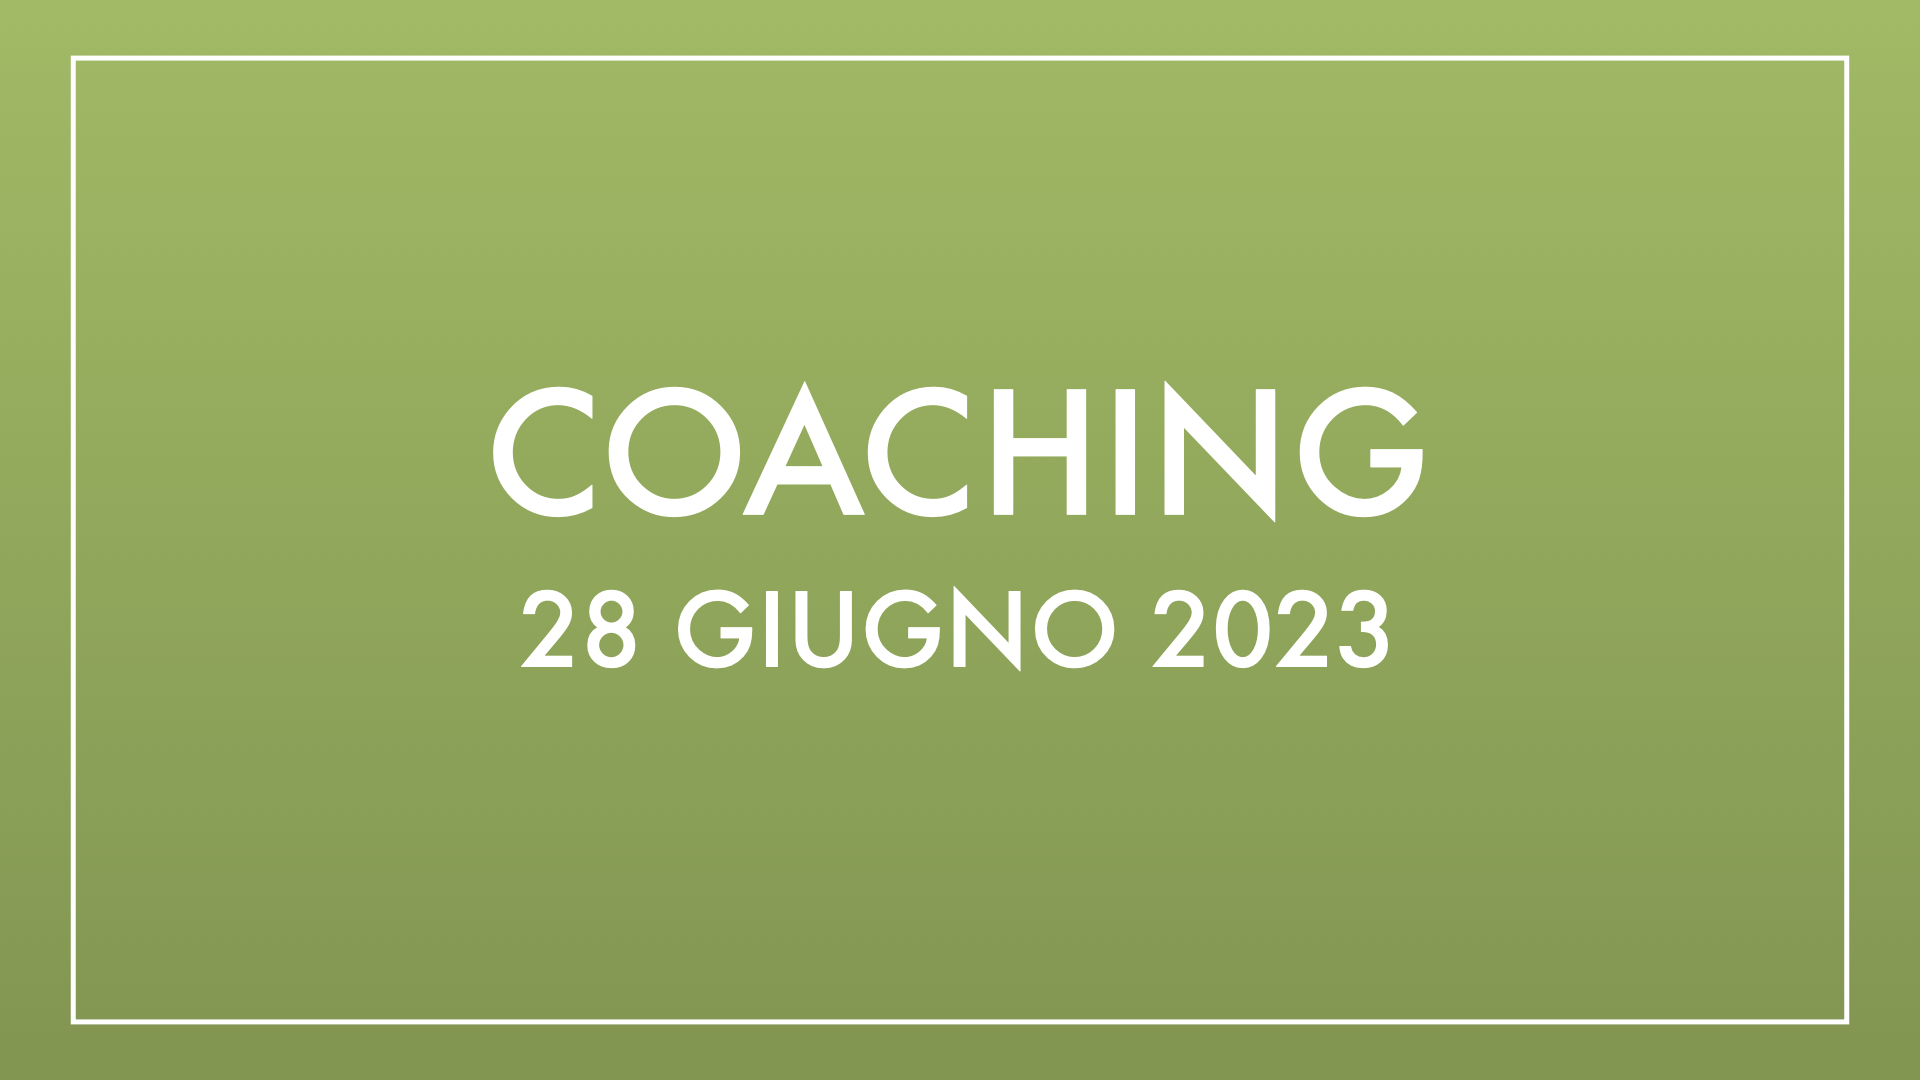 Coaching 28 giugno 2023